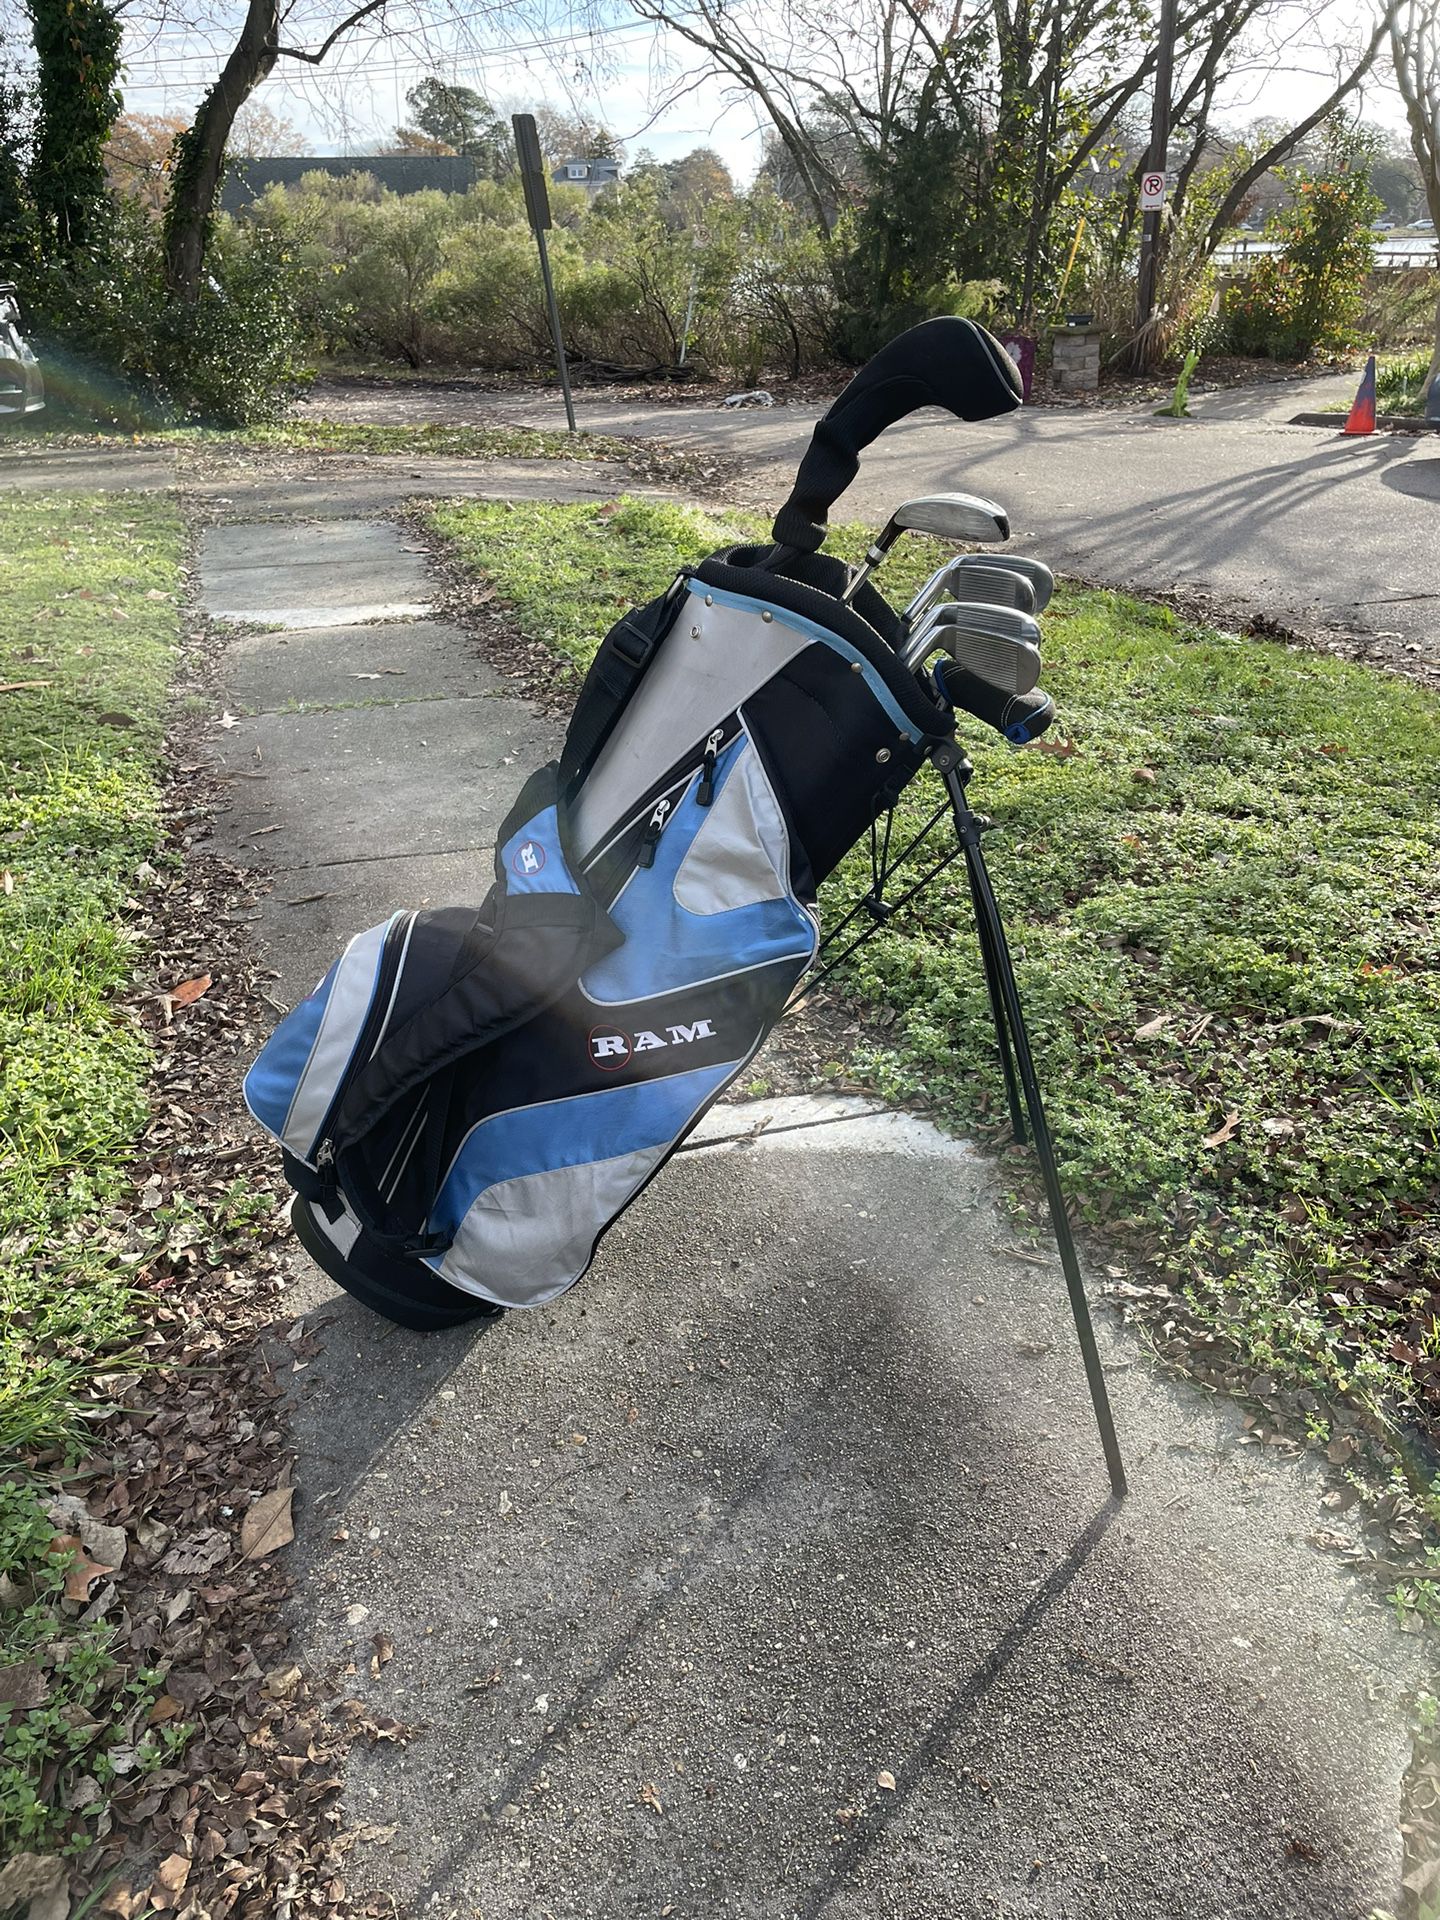 Ram G-Force Golf Club Starter Set, Walking Bag, and Tees